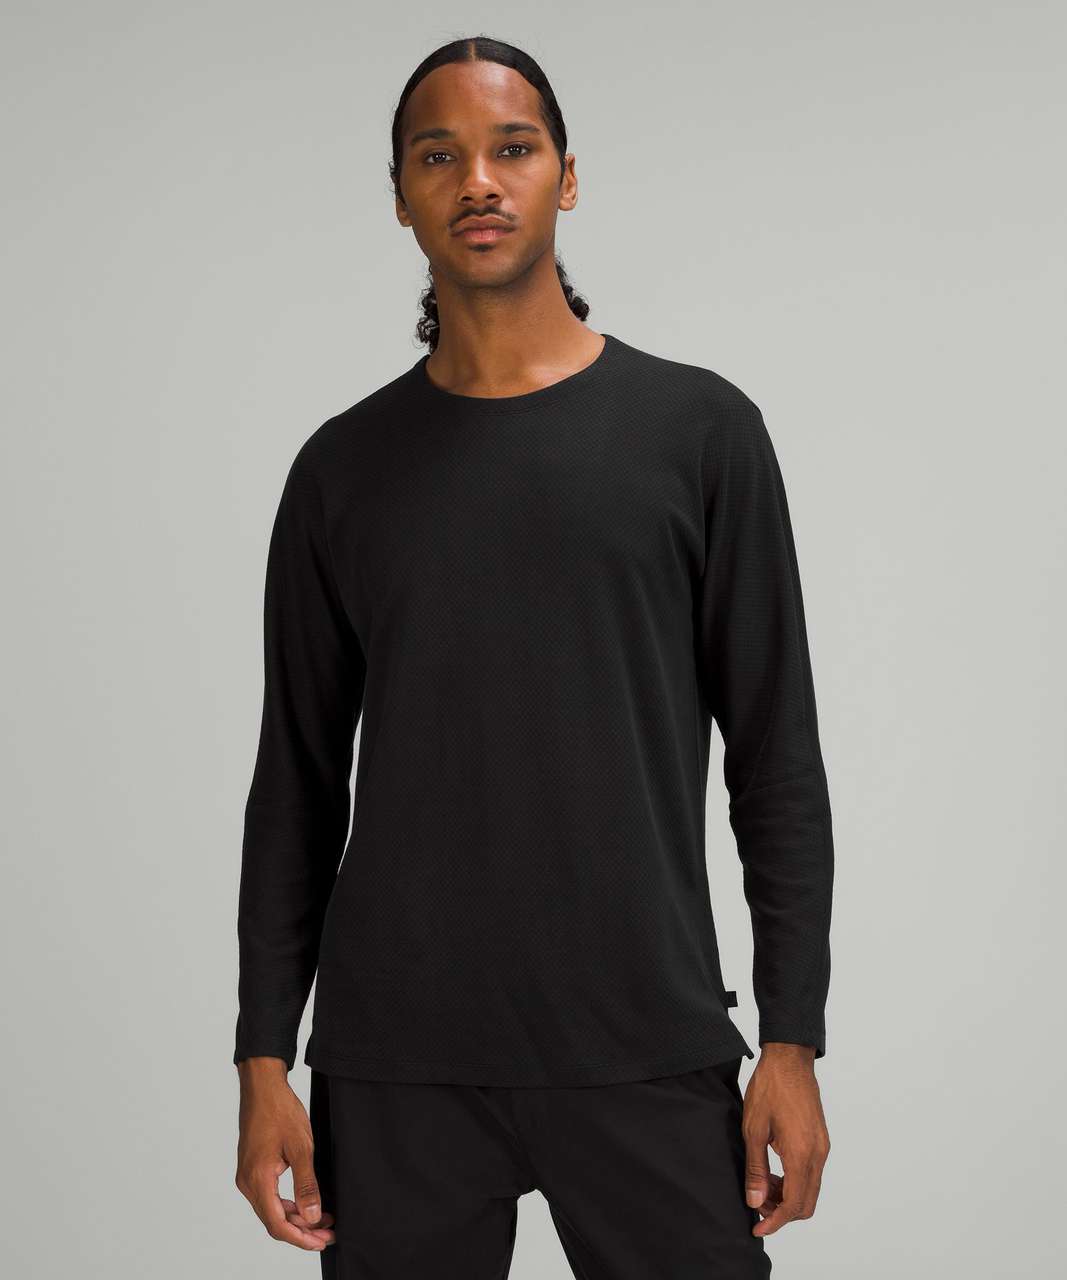 Lululemon lab Jacquard Long Sleeve T-Shirt - Black